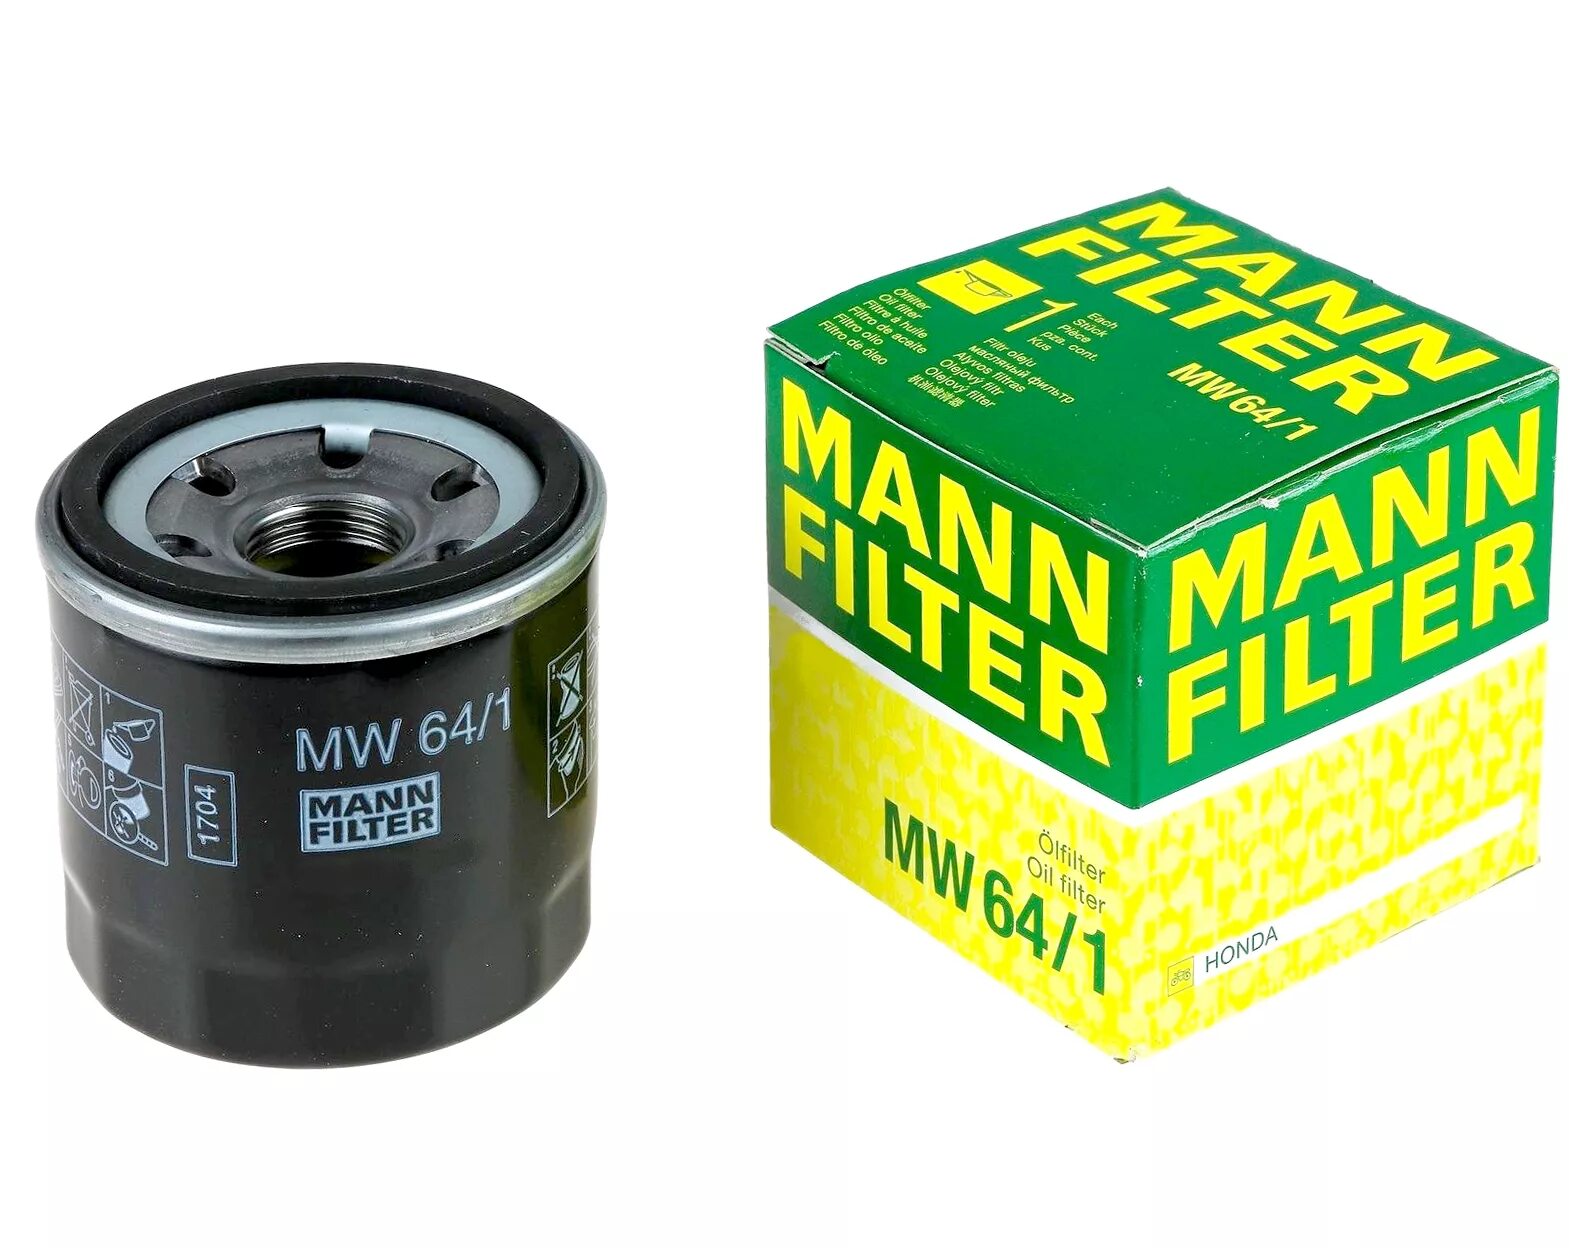 Mann фильтр оригинал. Фильтр масляный Mann mw64. Масляный фильтр Mannol mw64. Mann-Filter MW 64/1 фильтр масляный для мотоциклов. Фильтр Манн 64/1 на Хонда.